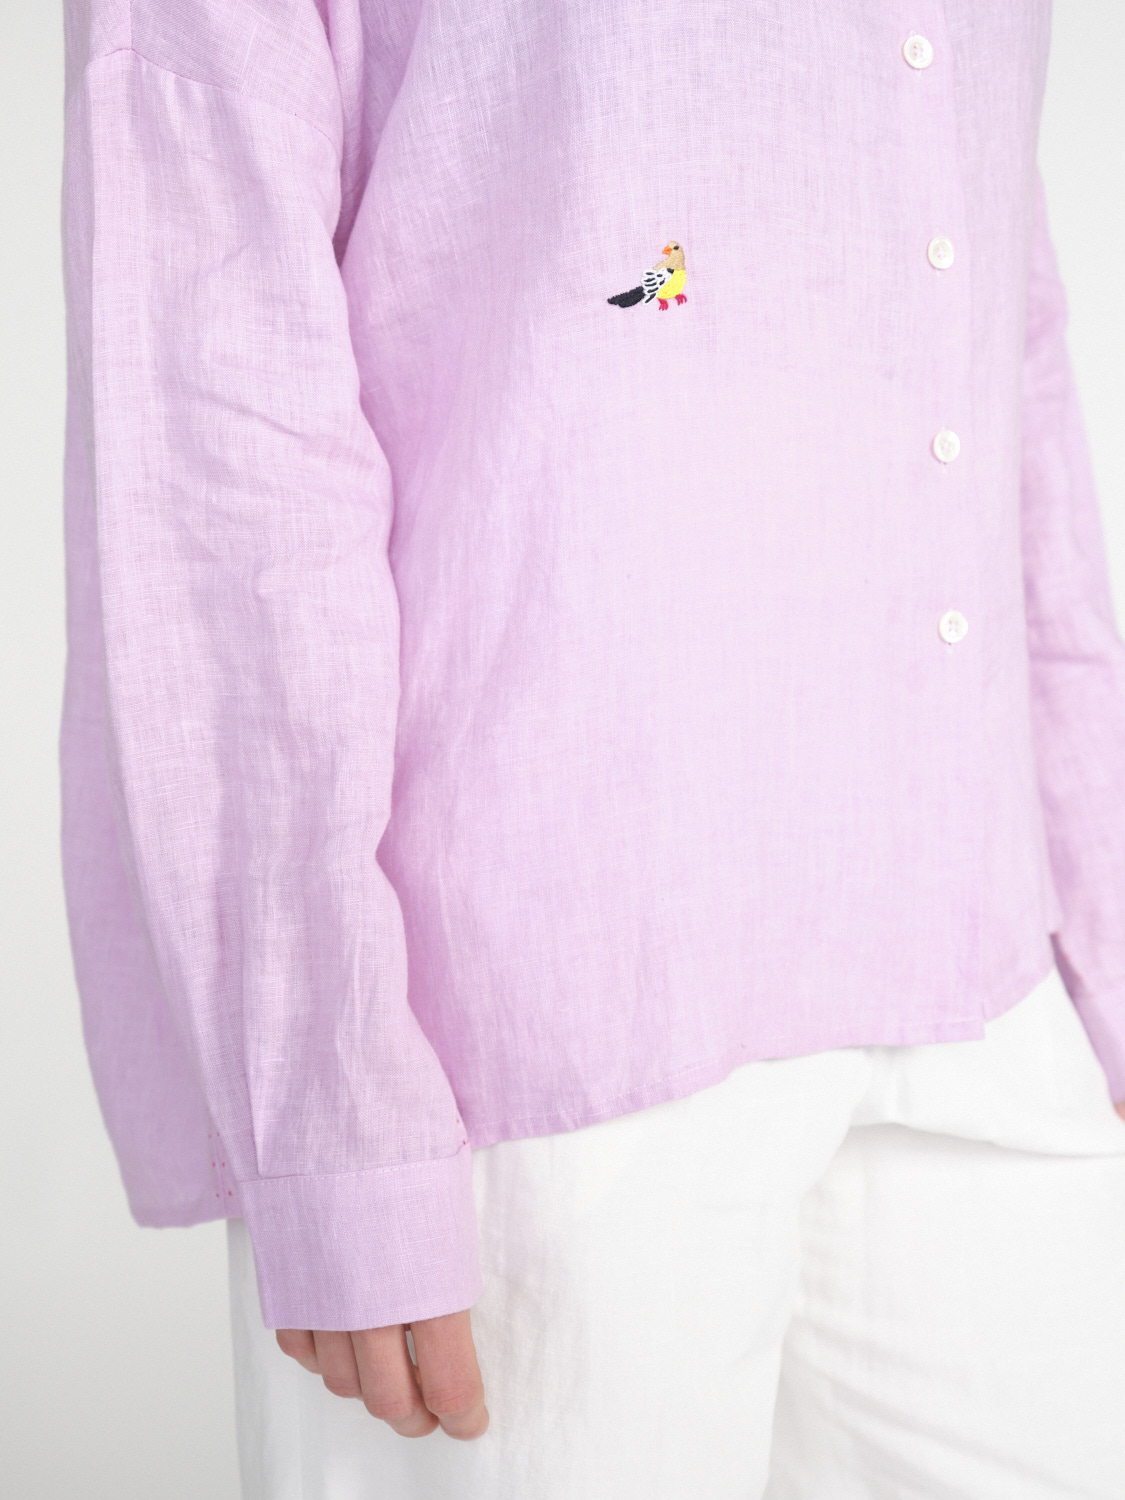 an an londree Summer – Leinen-Bluse mit verspielten Details   rosa M